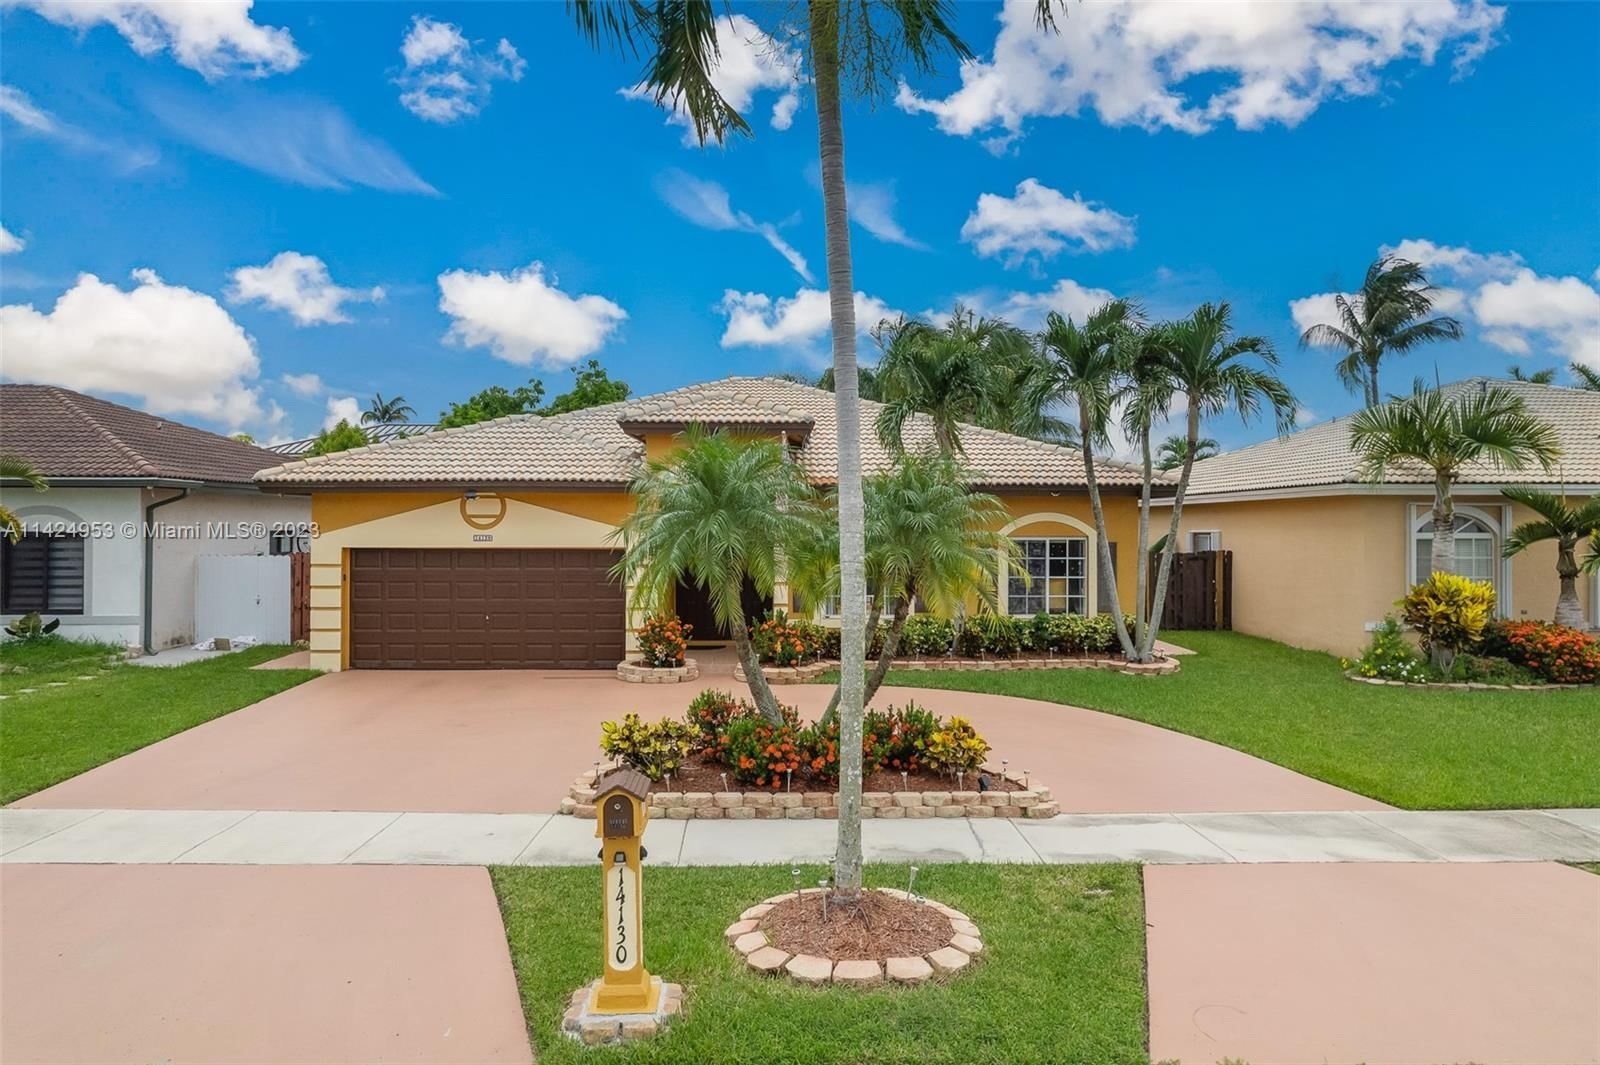 Real estate property located at 14130 160th Ct, Miami-Dade County, Miami, FL